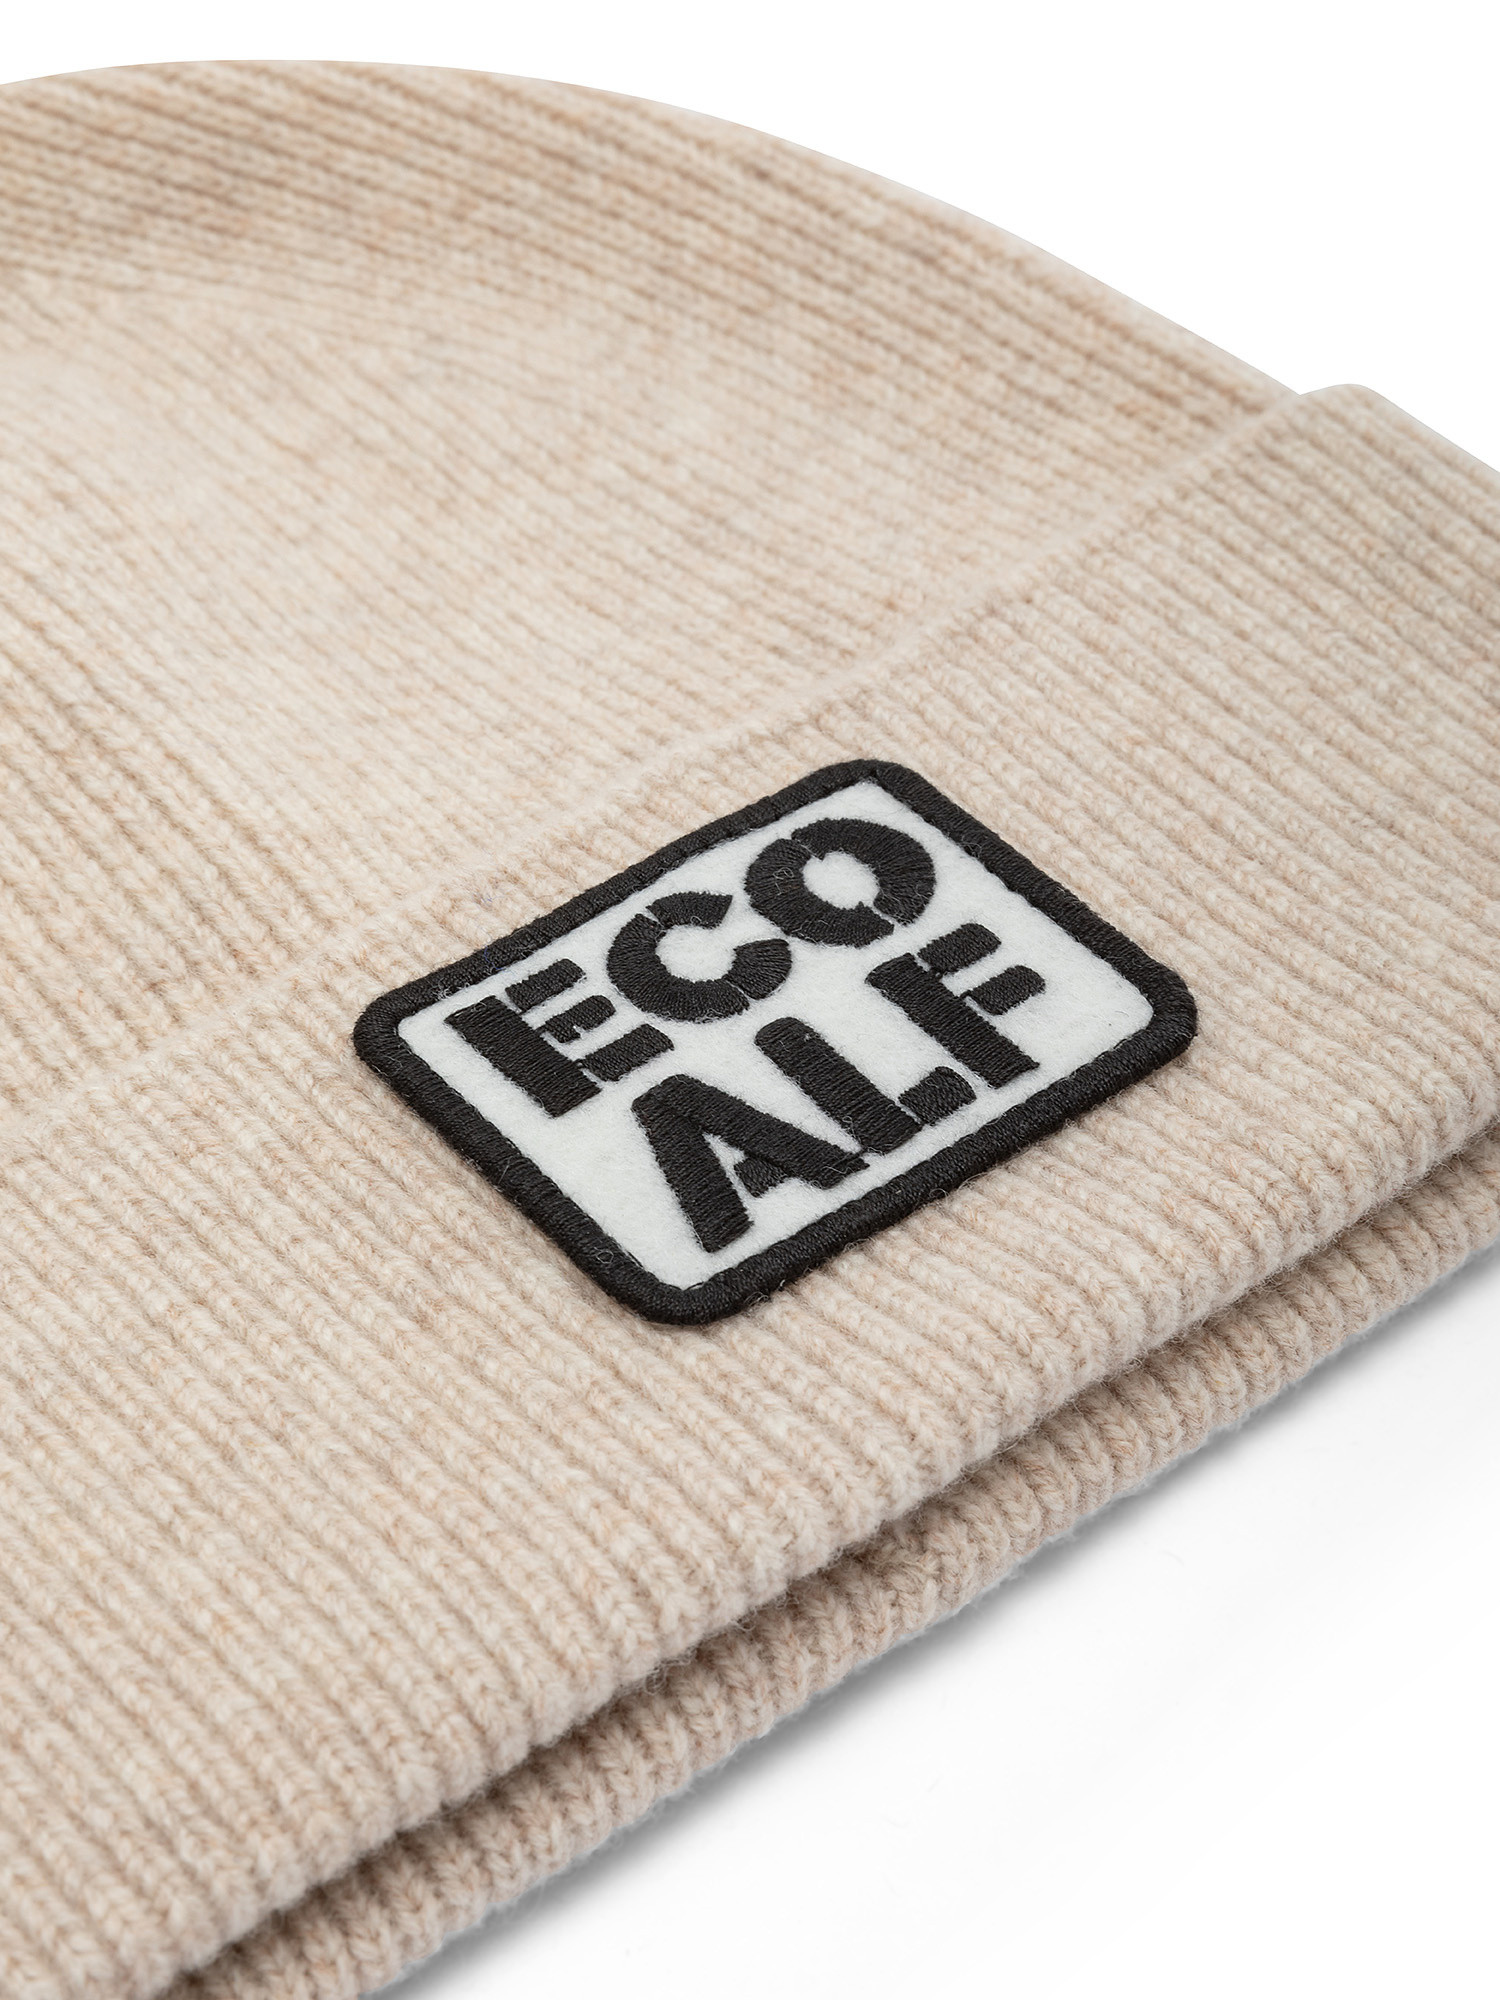 Ecoalf - Cappello con logo, Beige chiaro, large image number 1